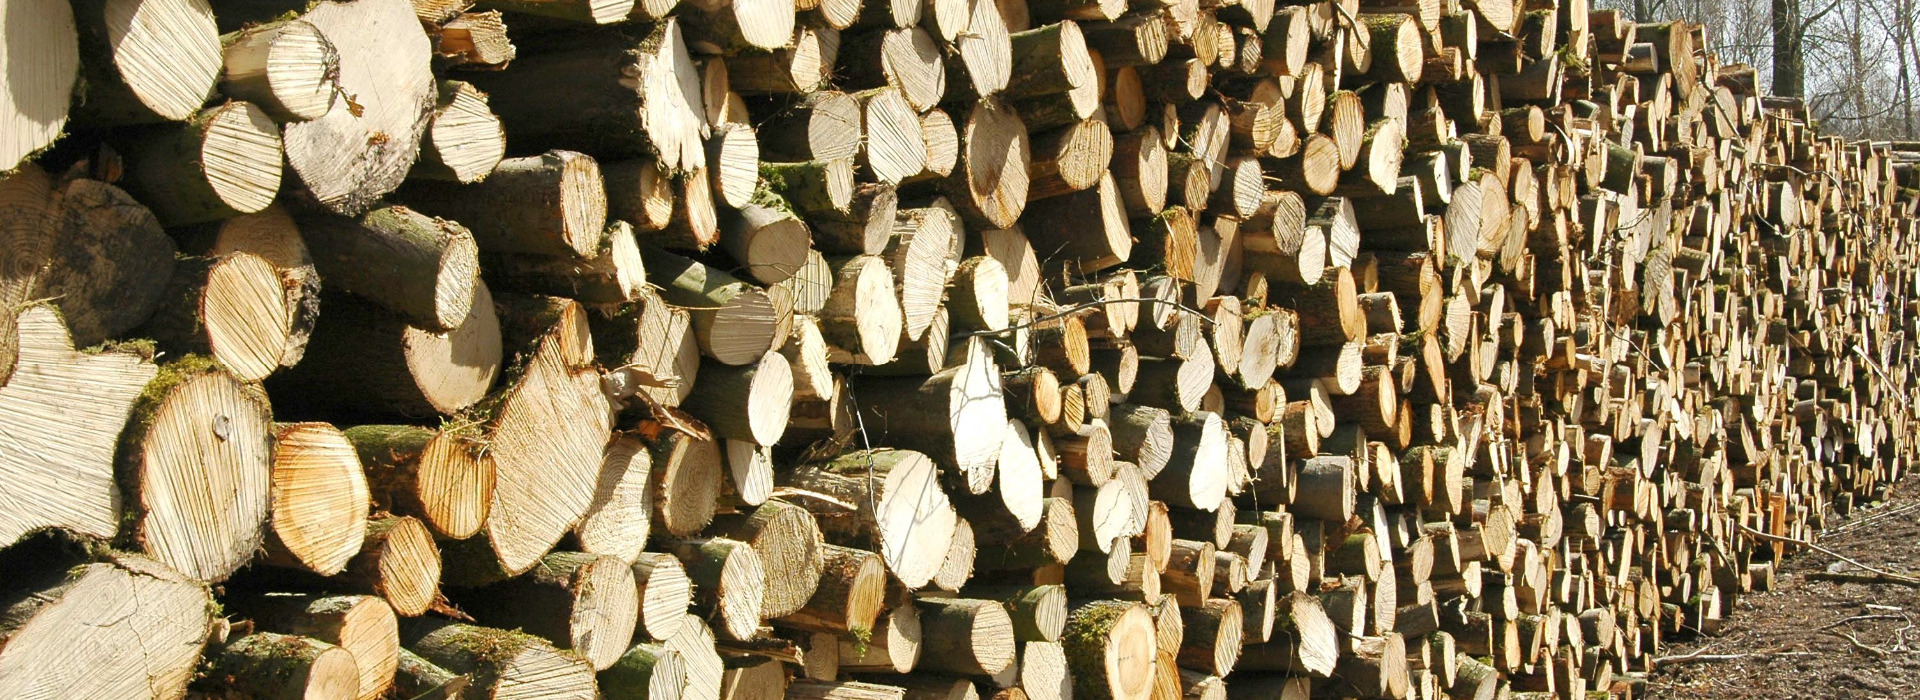 Weeks Forestry, Log stacks